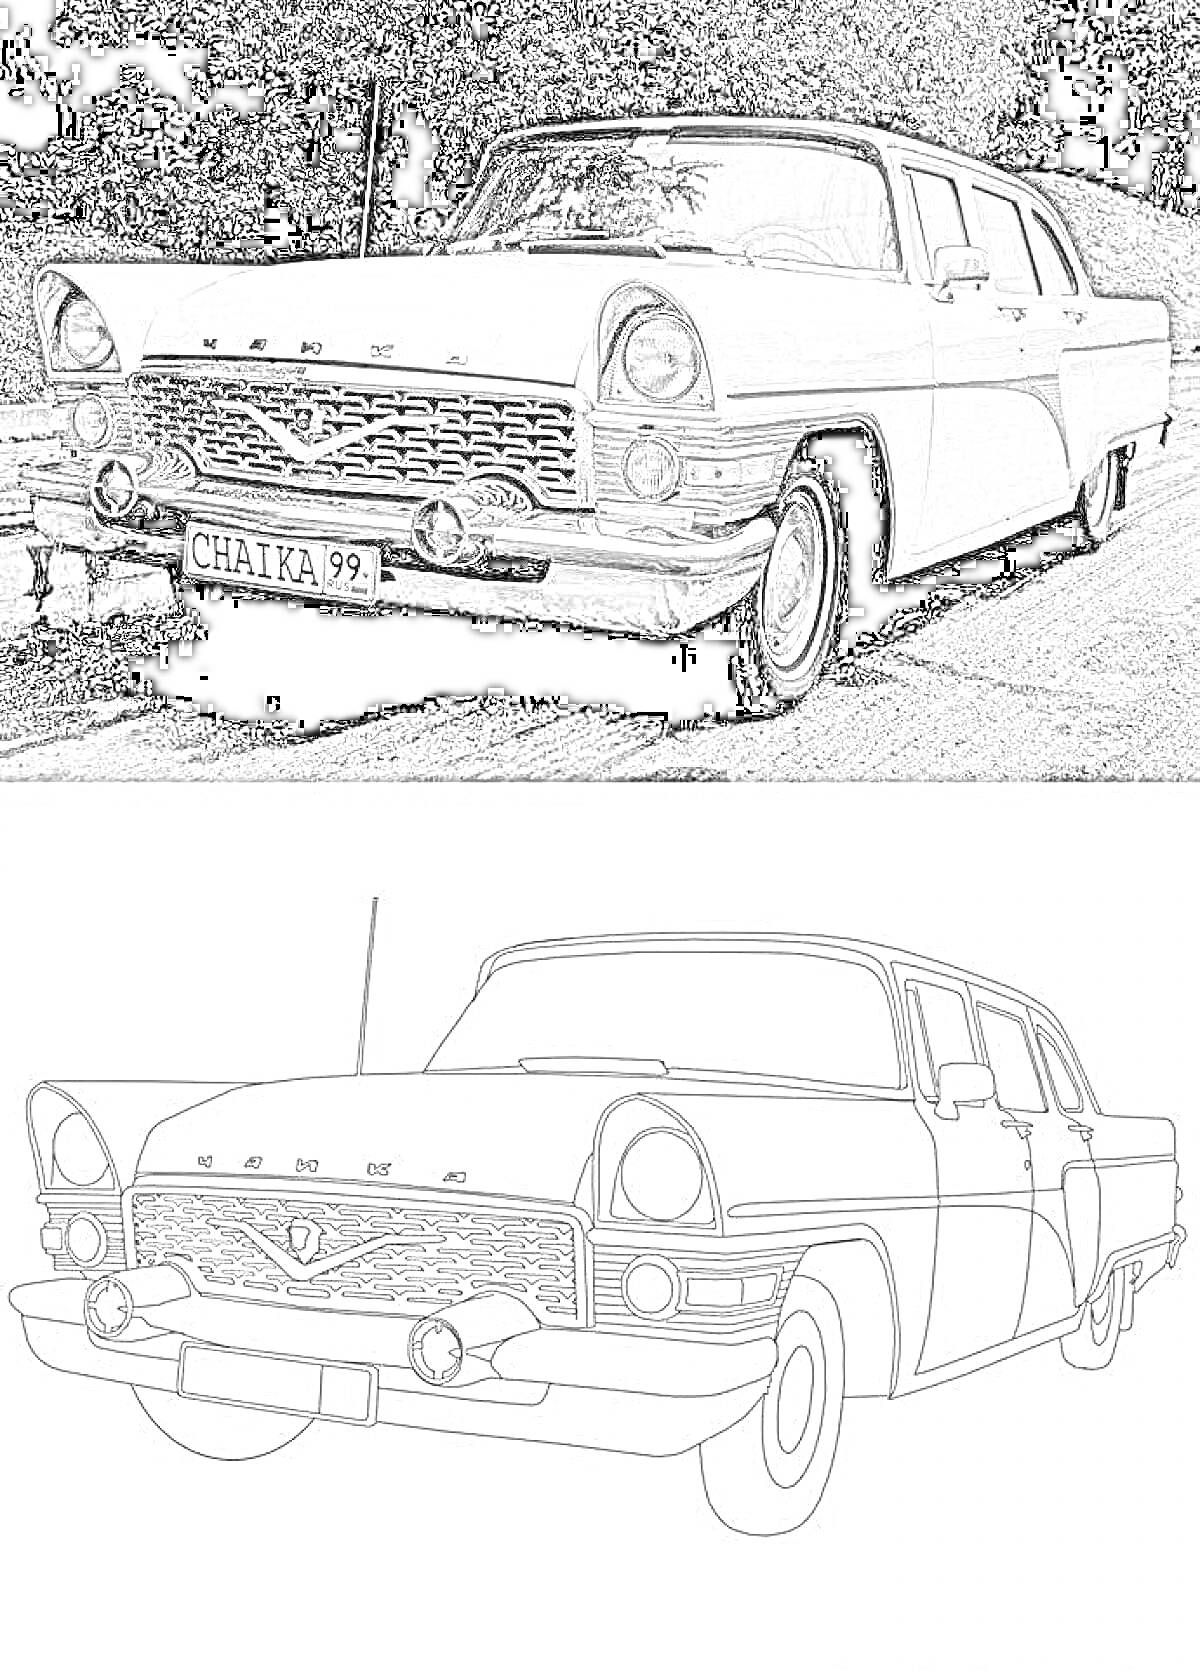 Раскраска Раскраска автомобиля ГАЗ-13 'Чайка' на парковке